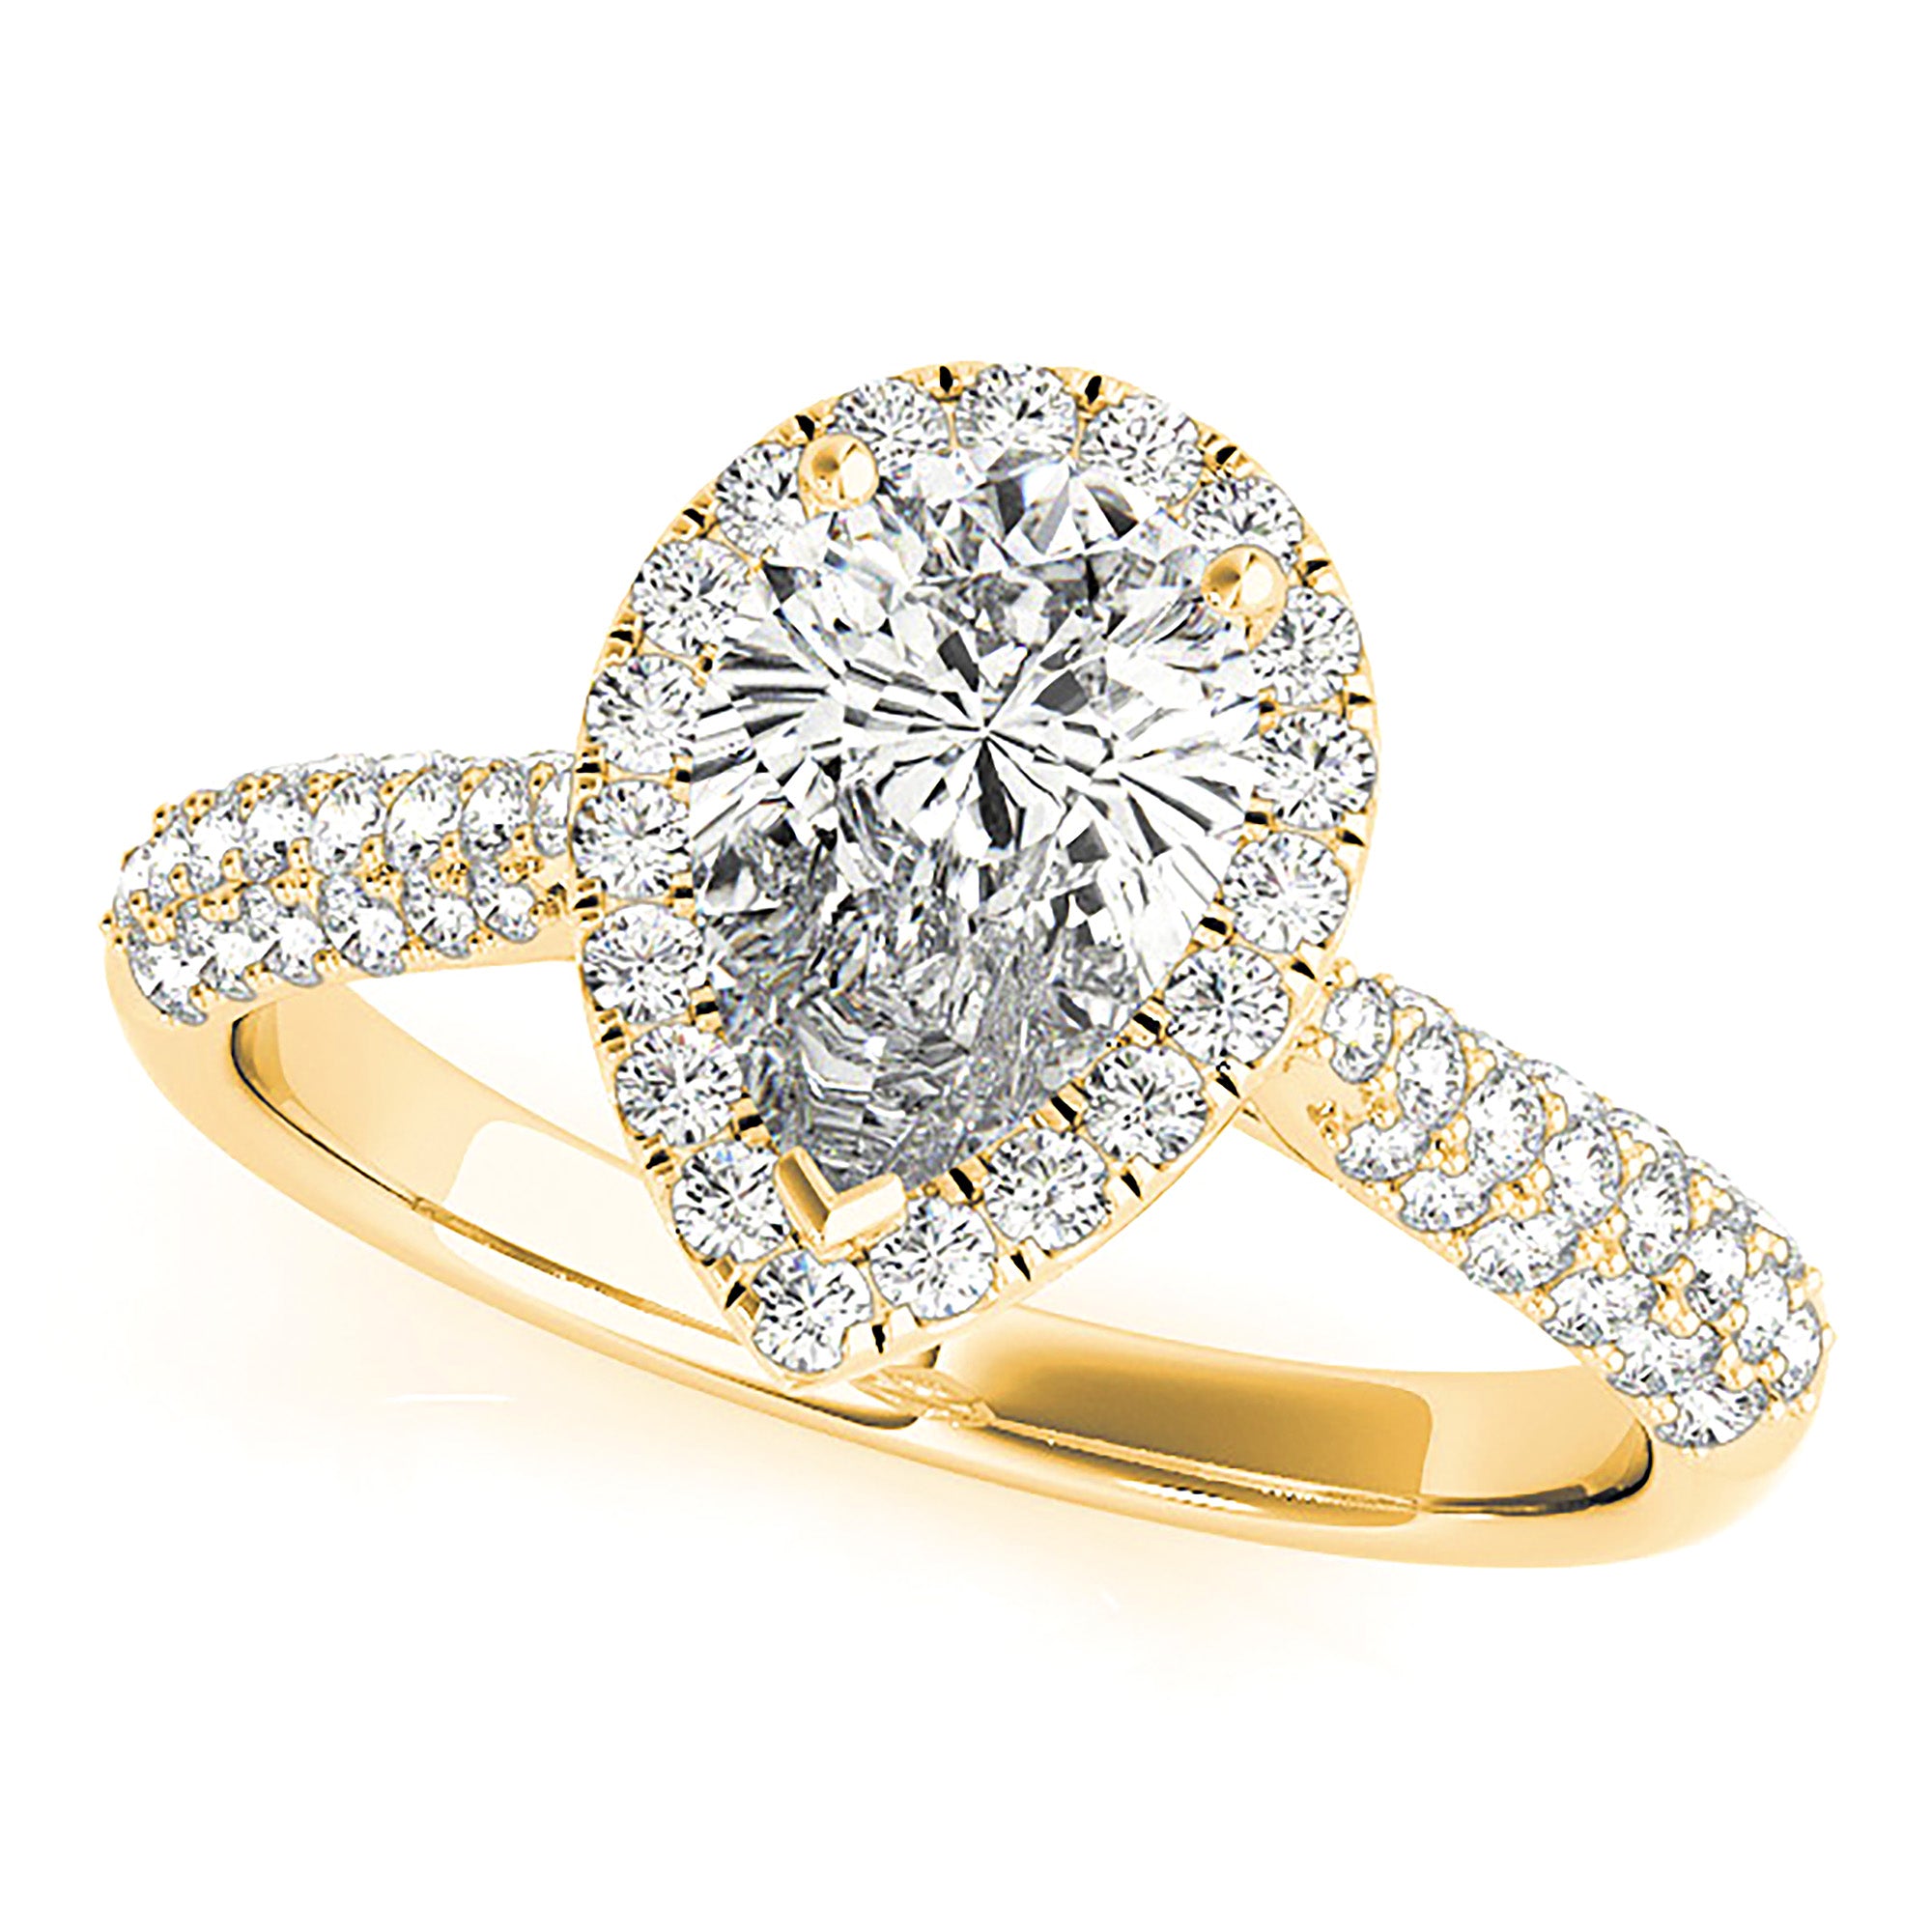 Halo Pear Diamond Engagement Ring-in 14K/18K White, Yellow, Rose Gold and Platinum - Christmas Jewelry Gift -VIRABYANI